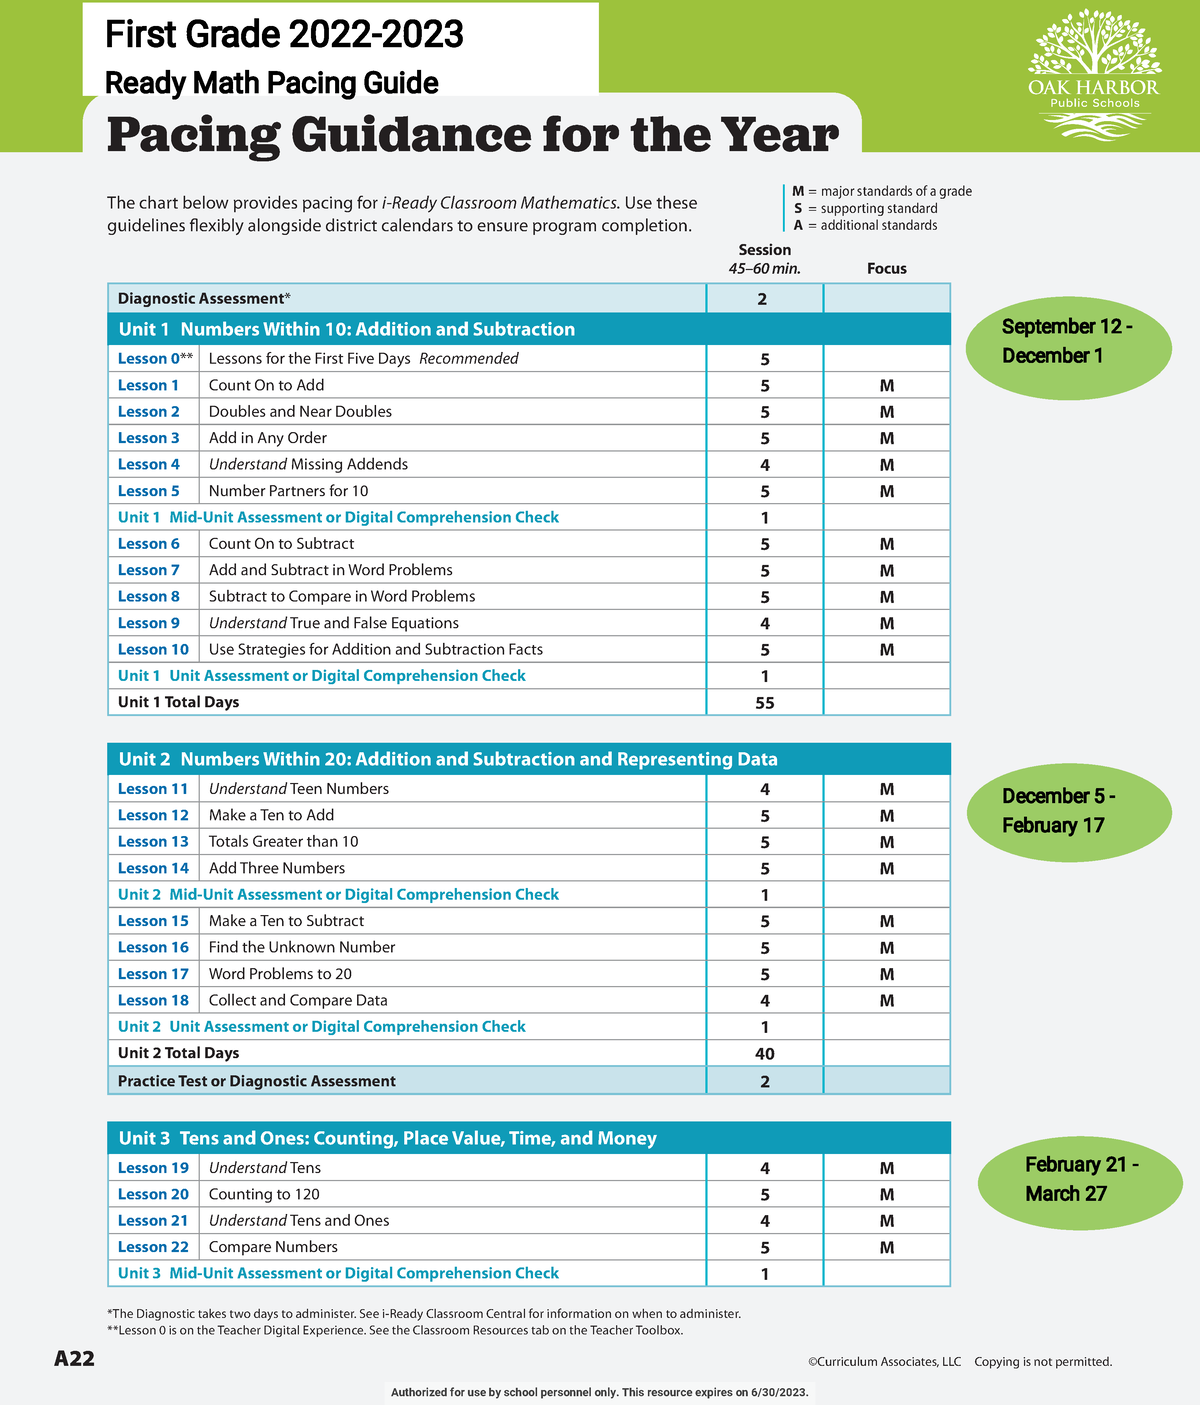 22 23 First Grade i Ready Pacing Guide A22 ©Curriculum Associates